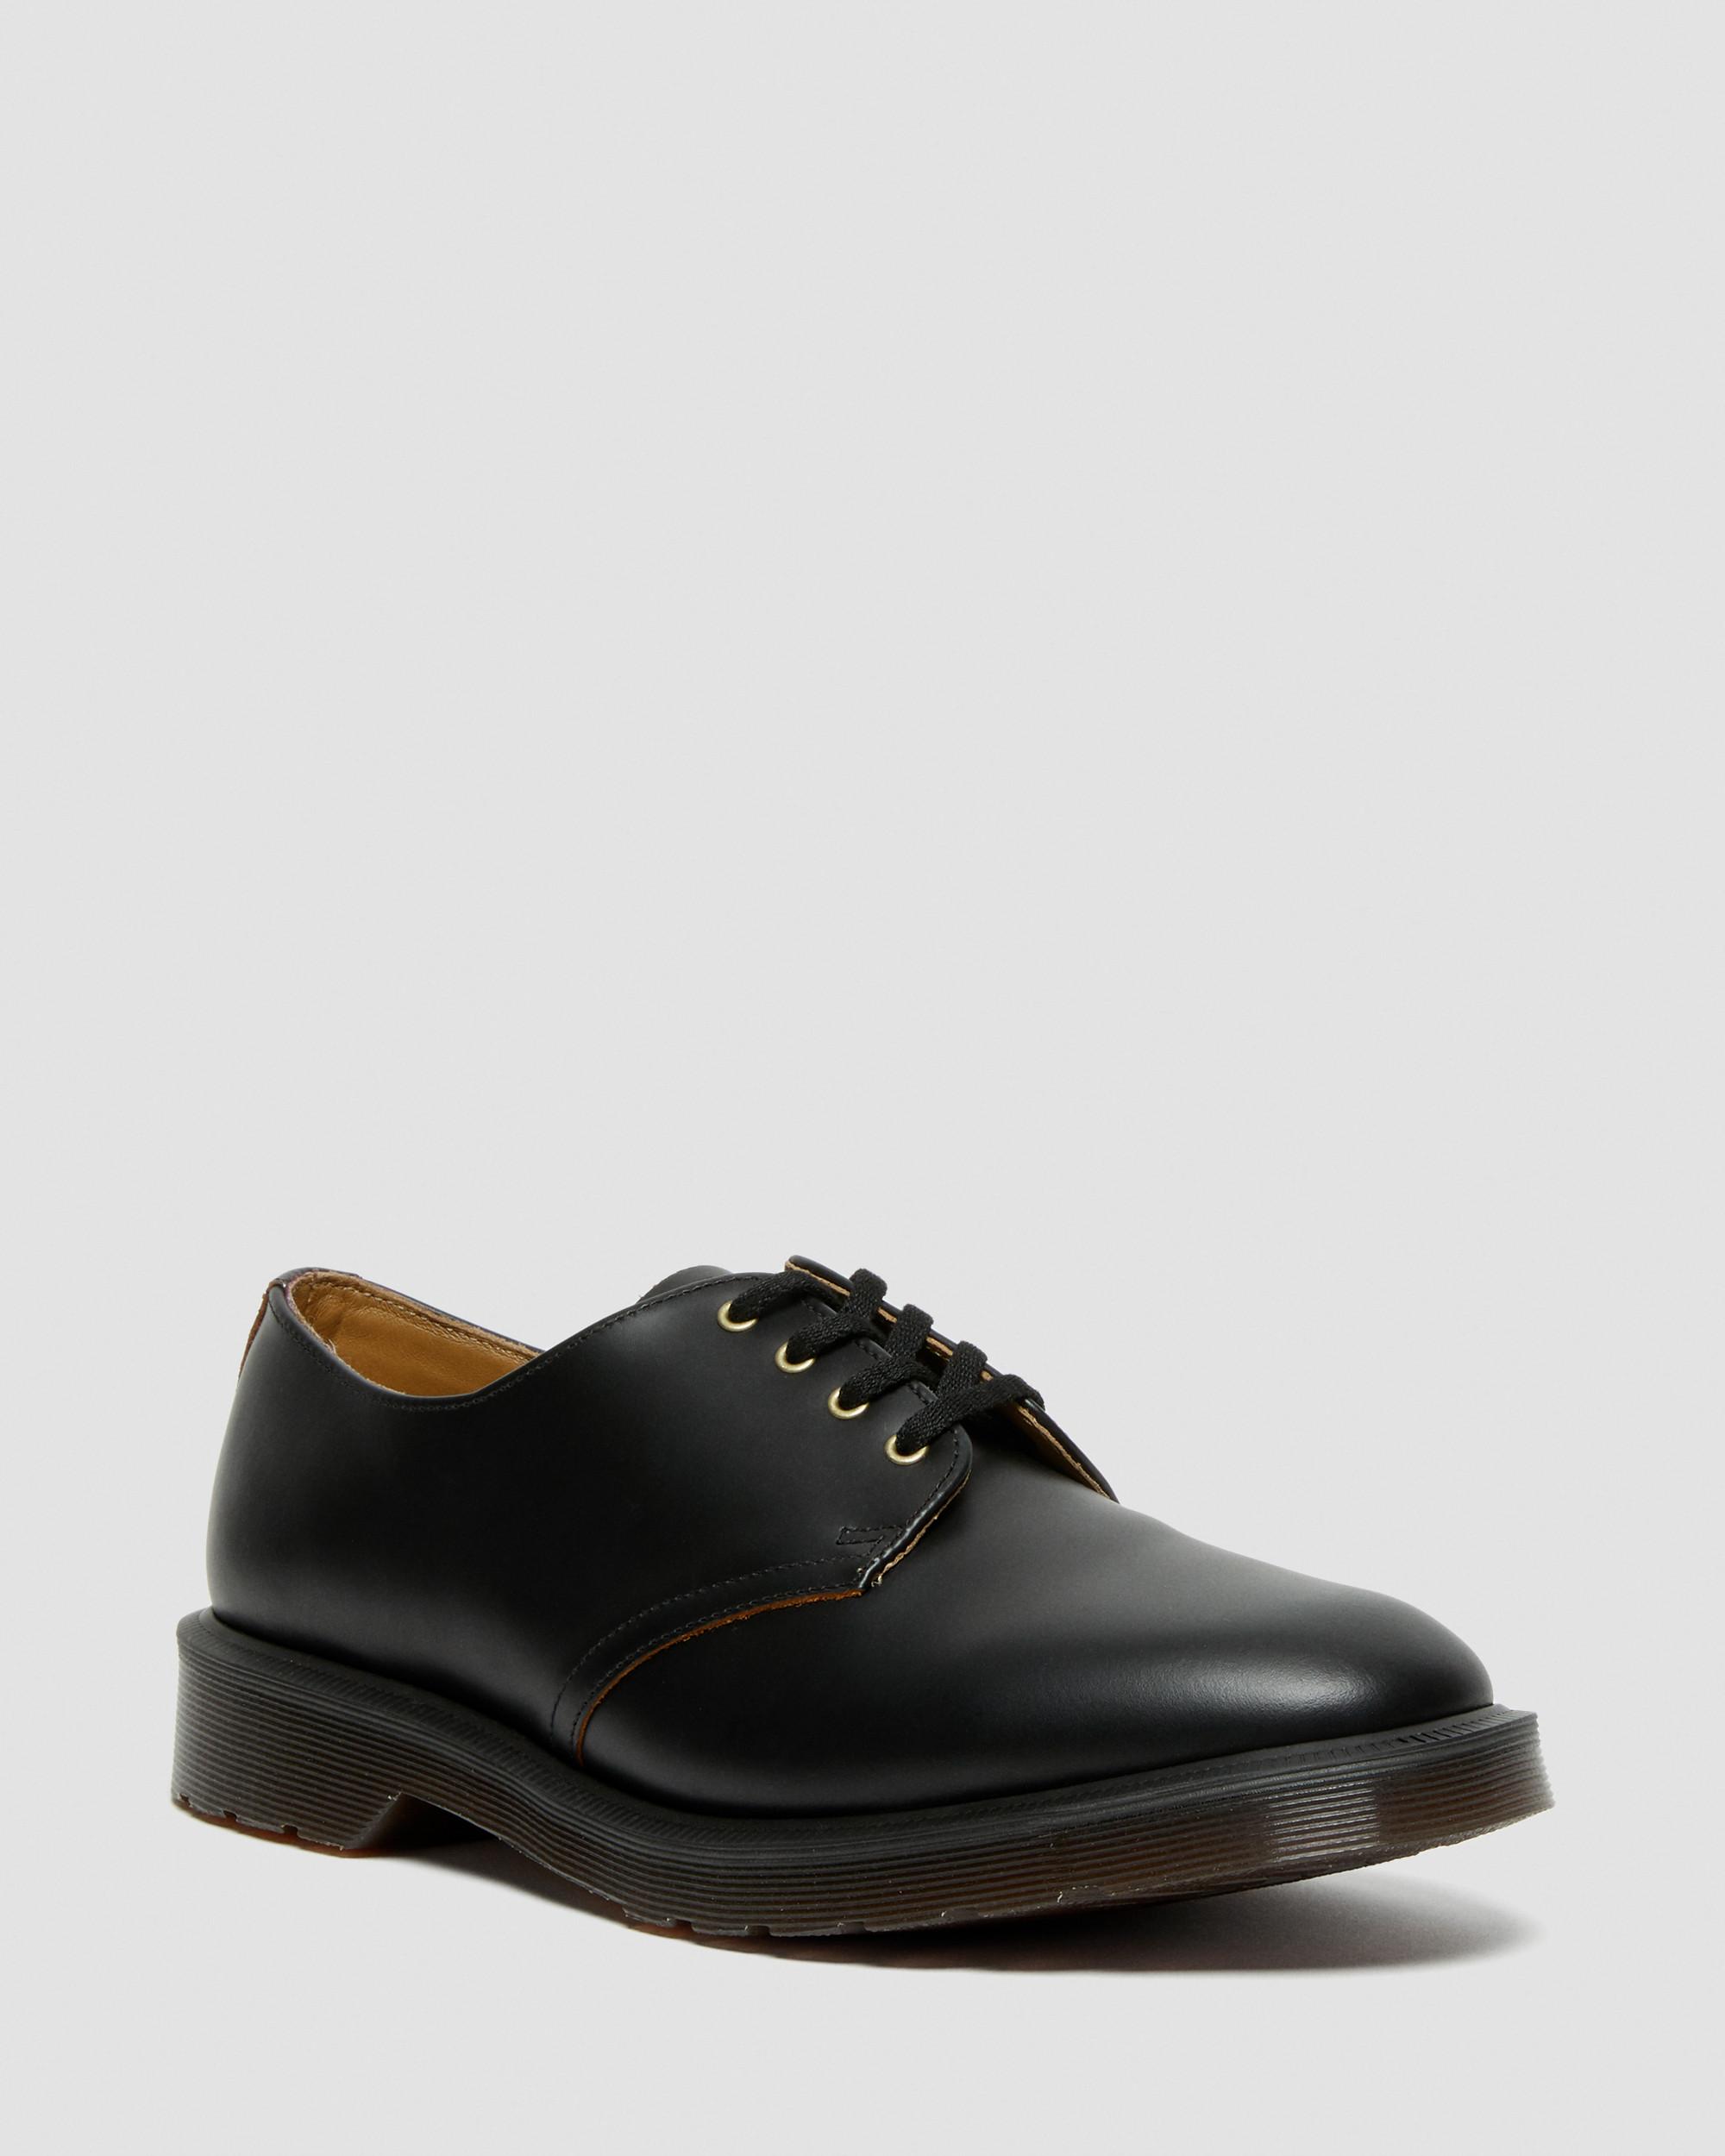 Smiths Vintage Smooth Leather Dress Shoes in Black | Dr. Martens